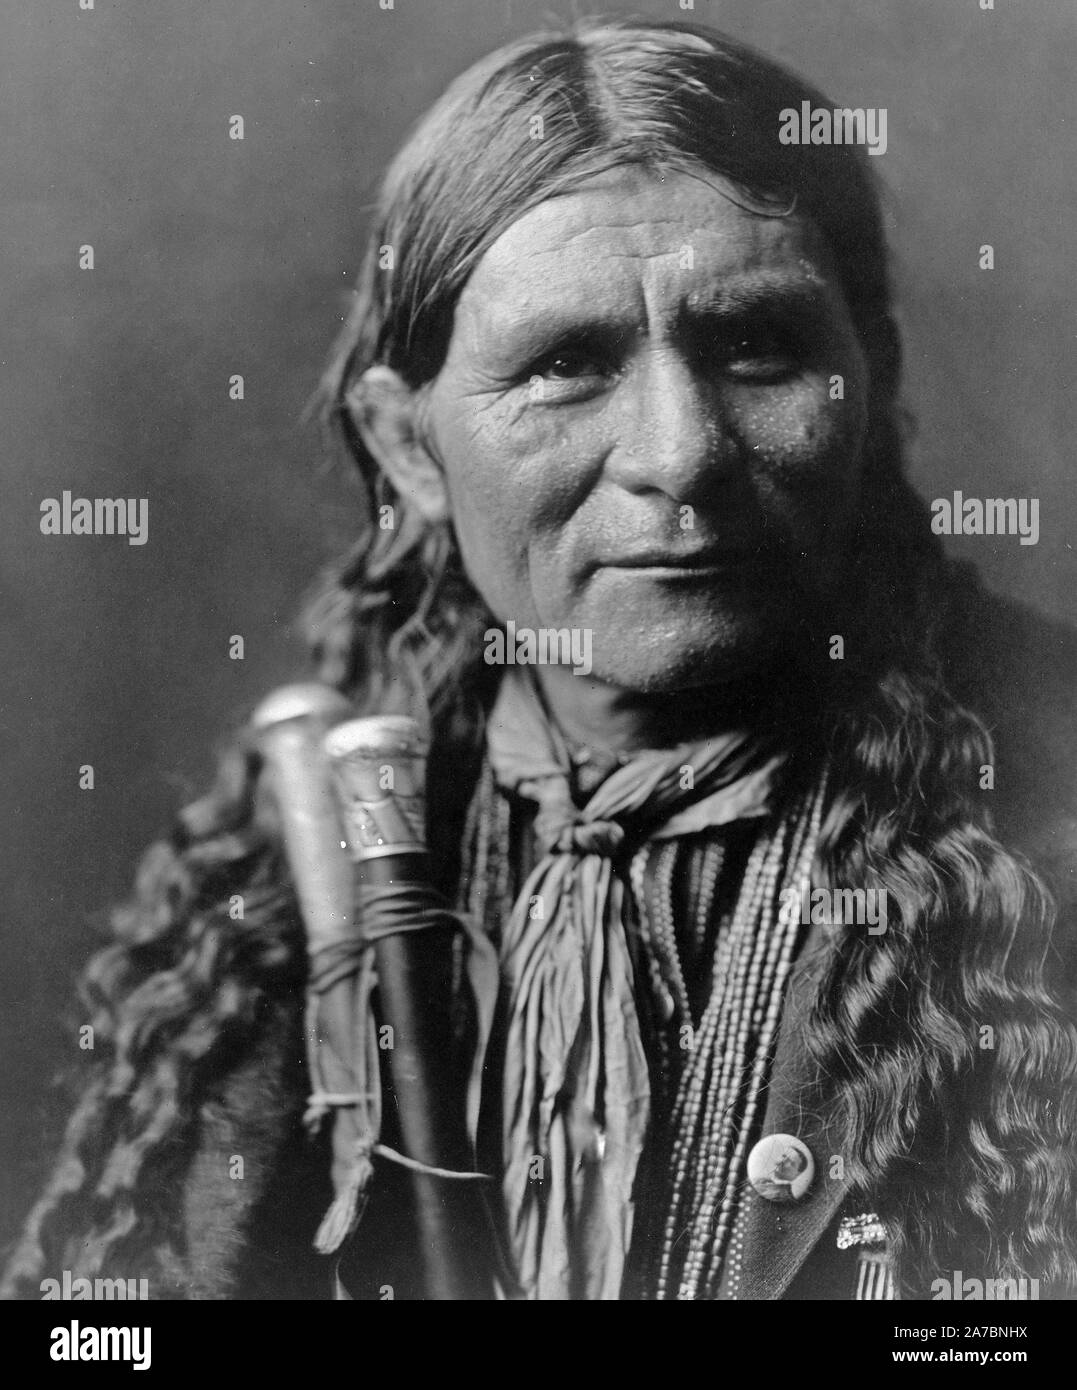 Pueblo indigenous Black and White Stock Photos & Images - Alamy